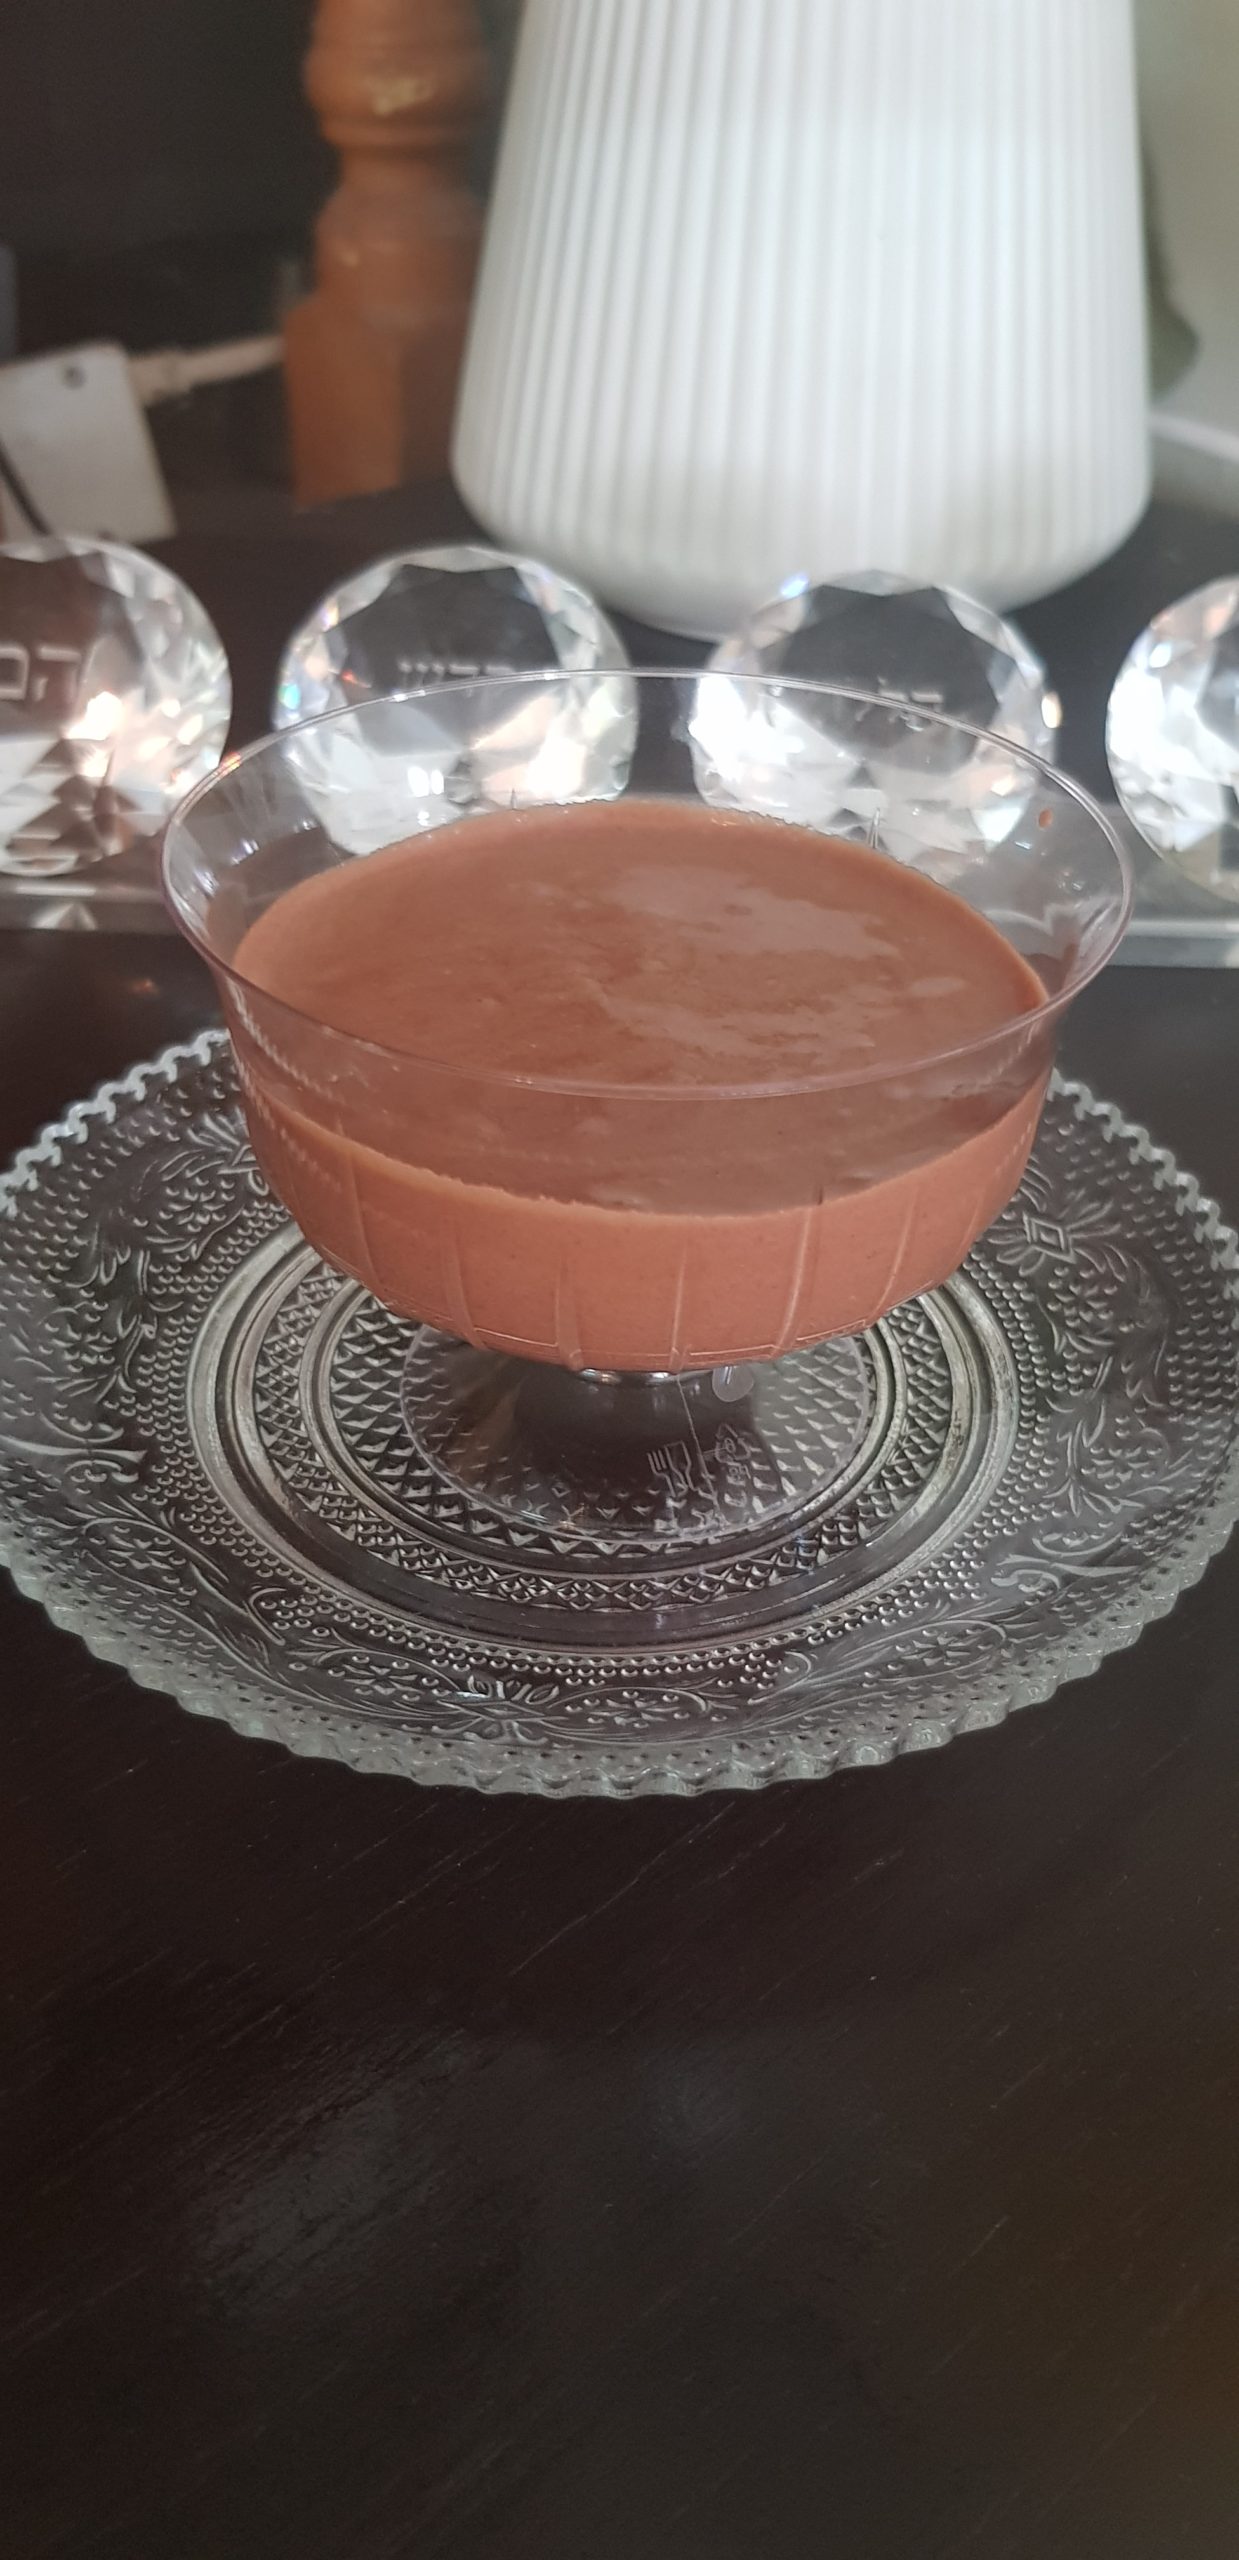 La mousse au chocolat du Chef Philippe Conticini !